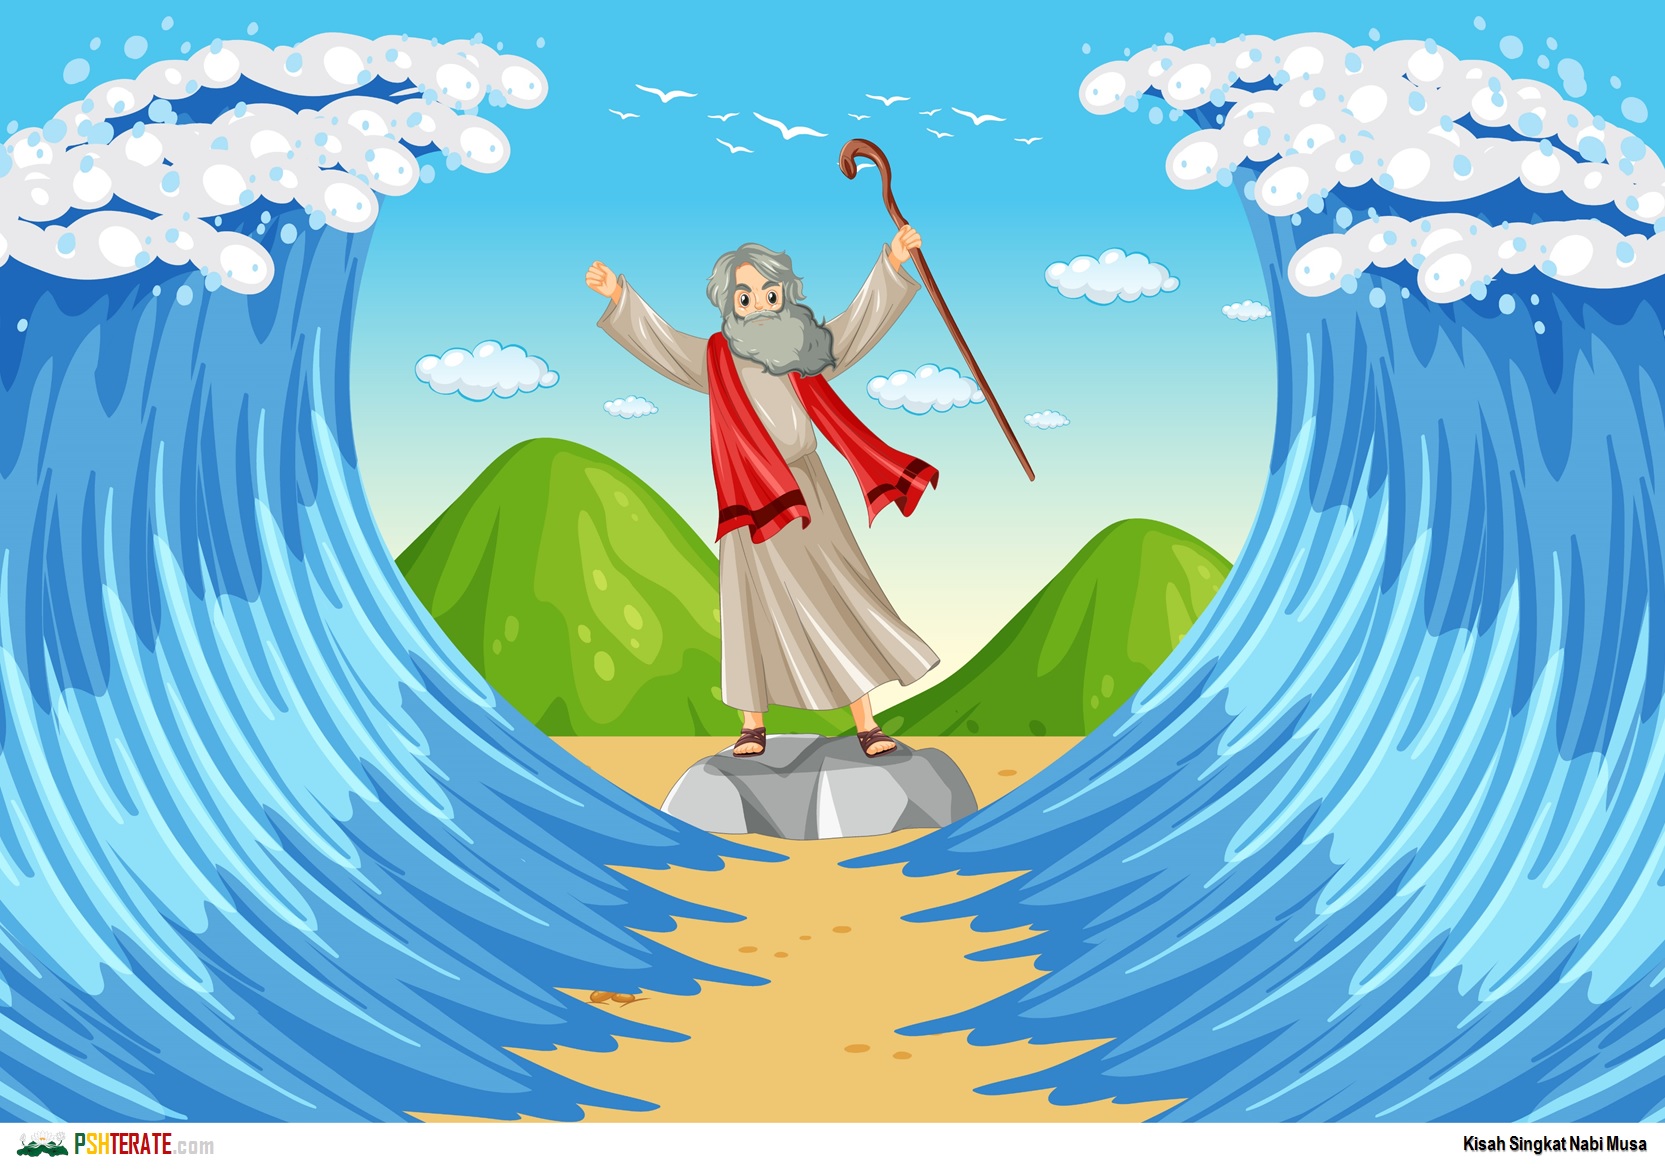 <a href="https://www.pshterate.com/"><img src="Kisah singkat Mukjizat Nabi Musa AS Membelah Laut Merah.jpg" alt="Kisah Singkat Nabi Musa: Sebuah Kajian Tentang Kepemimpinan yang Baik dan Ketaatan kepada Allah"></a>